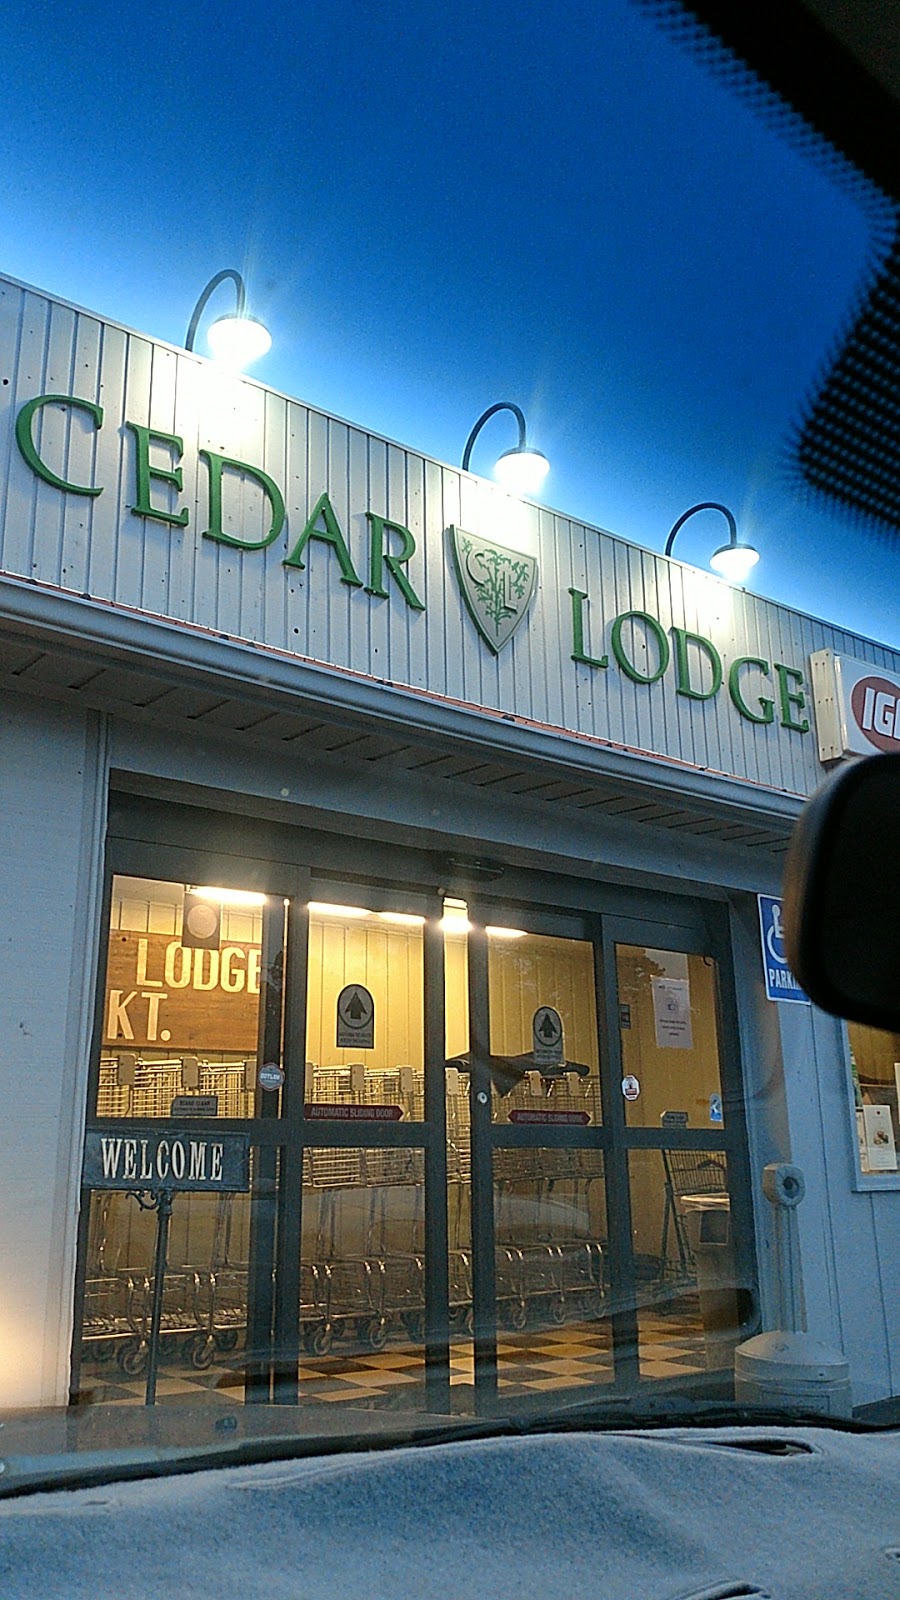 Cedar Lodge Market | 237 Cedar Lodge Rd, Thomasville, NC 27360, USA | Phone: (336) 476-6722